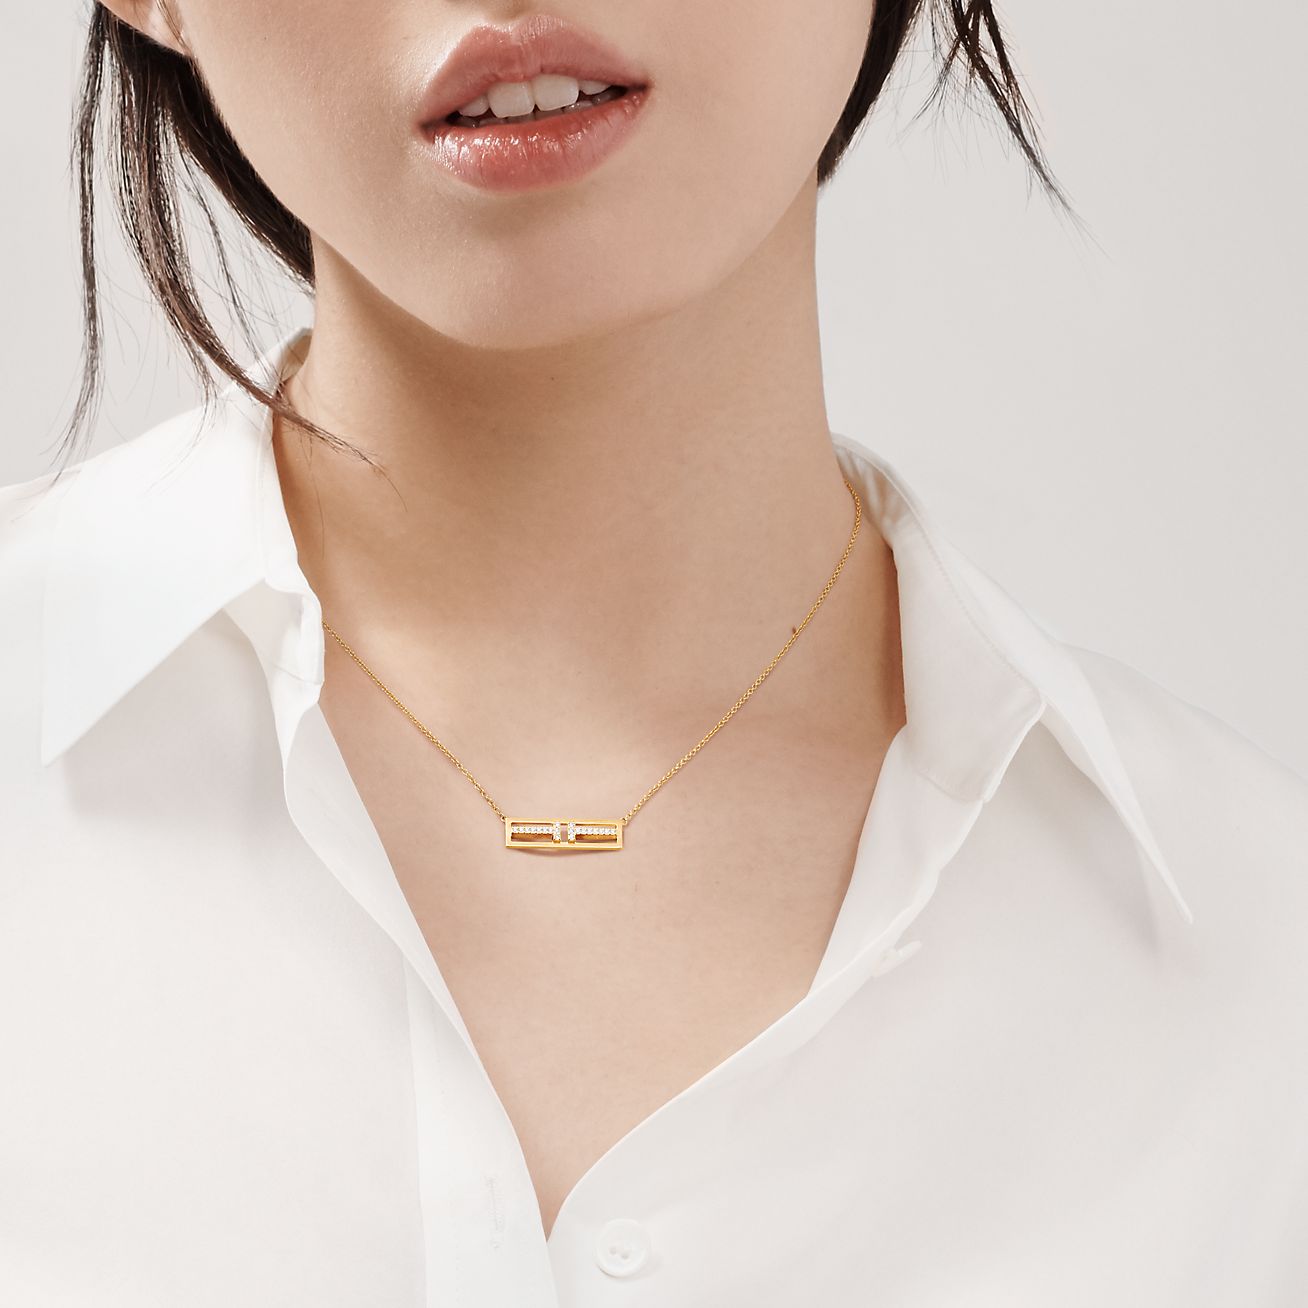 Gold horizontal bar necklace lh tl